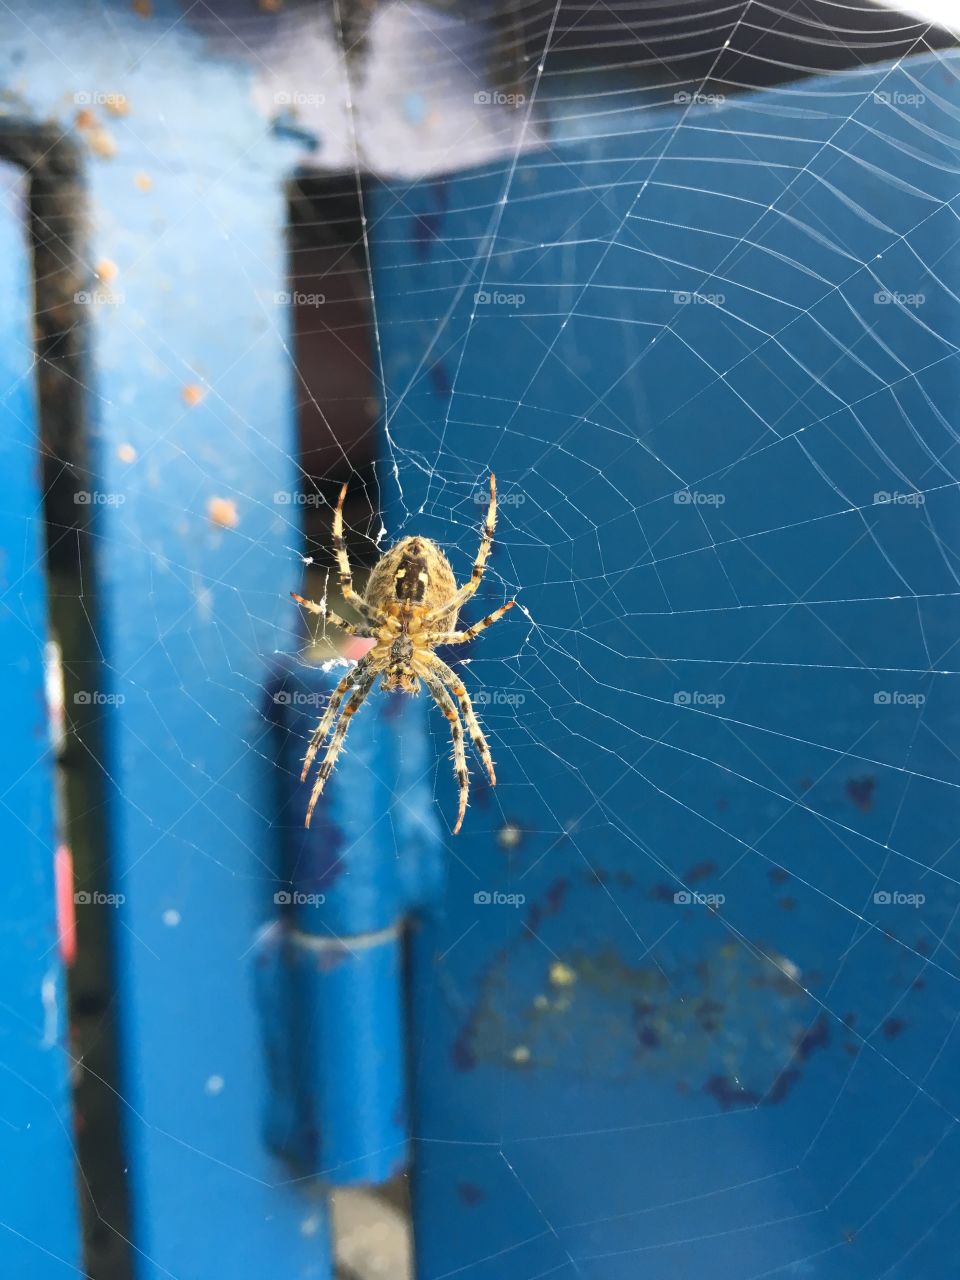 Spider web little gem 